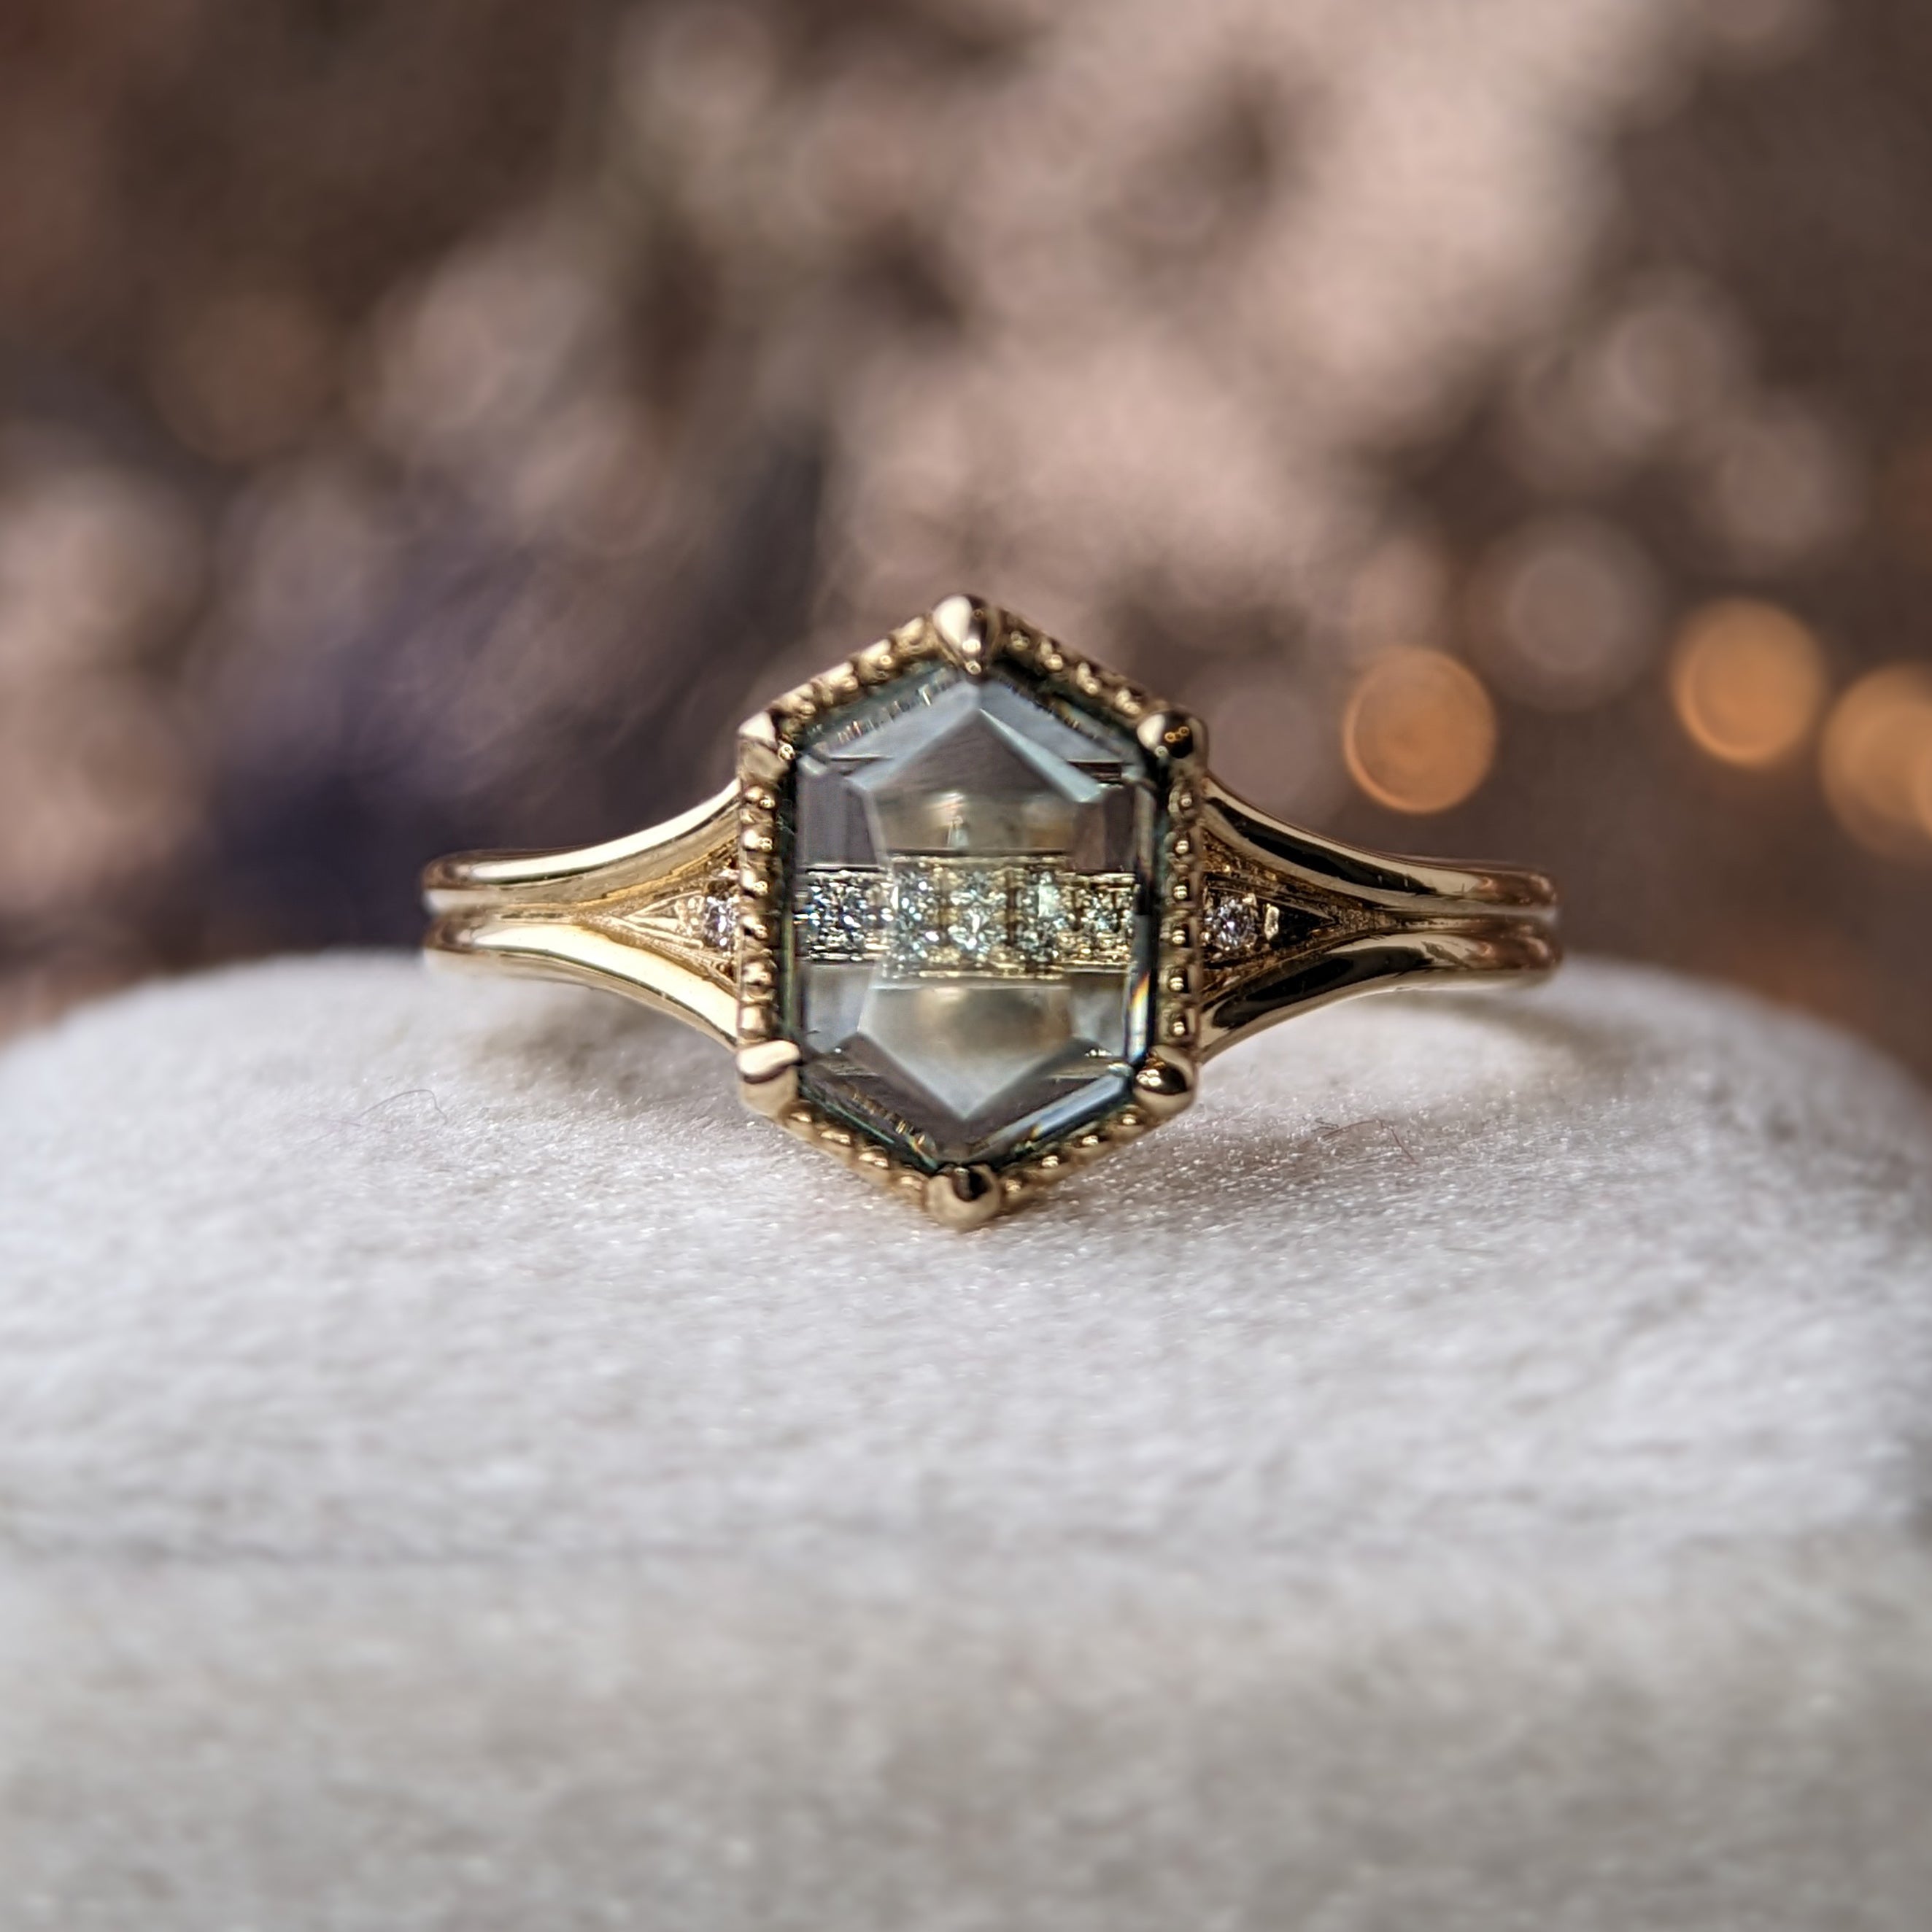 Make it Last a Lifetime: The Best Stones for Engagement Rings – TrueBijoux